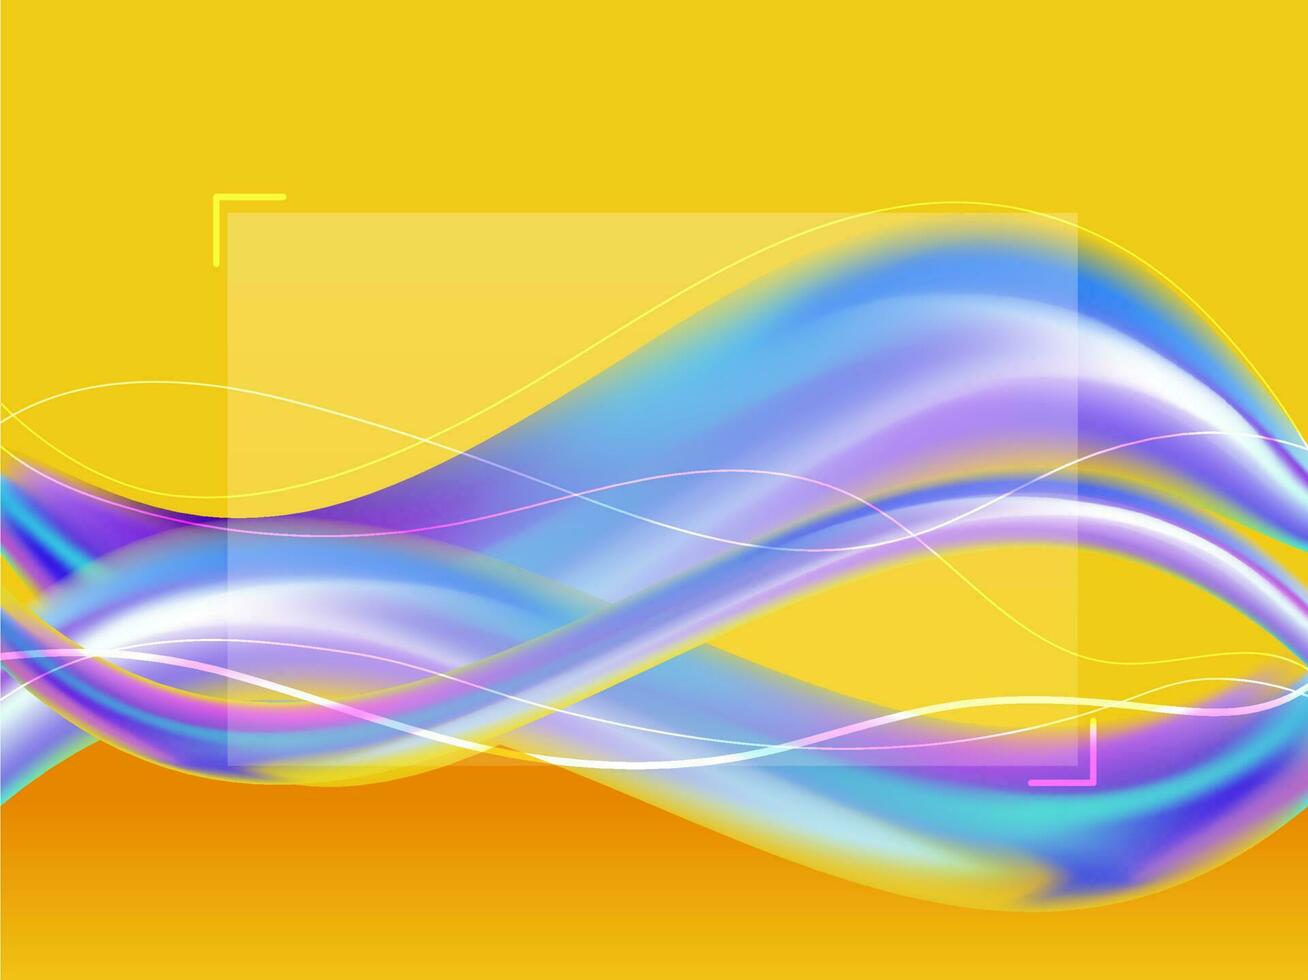 degradado color olas con difuminar efecto en amarillo antecedentes. vector